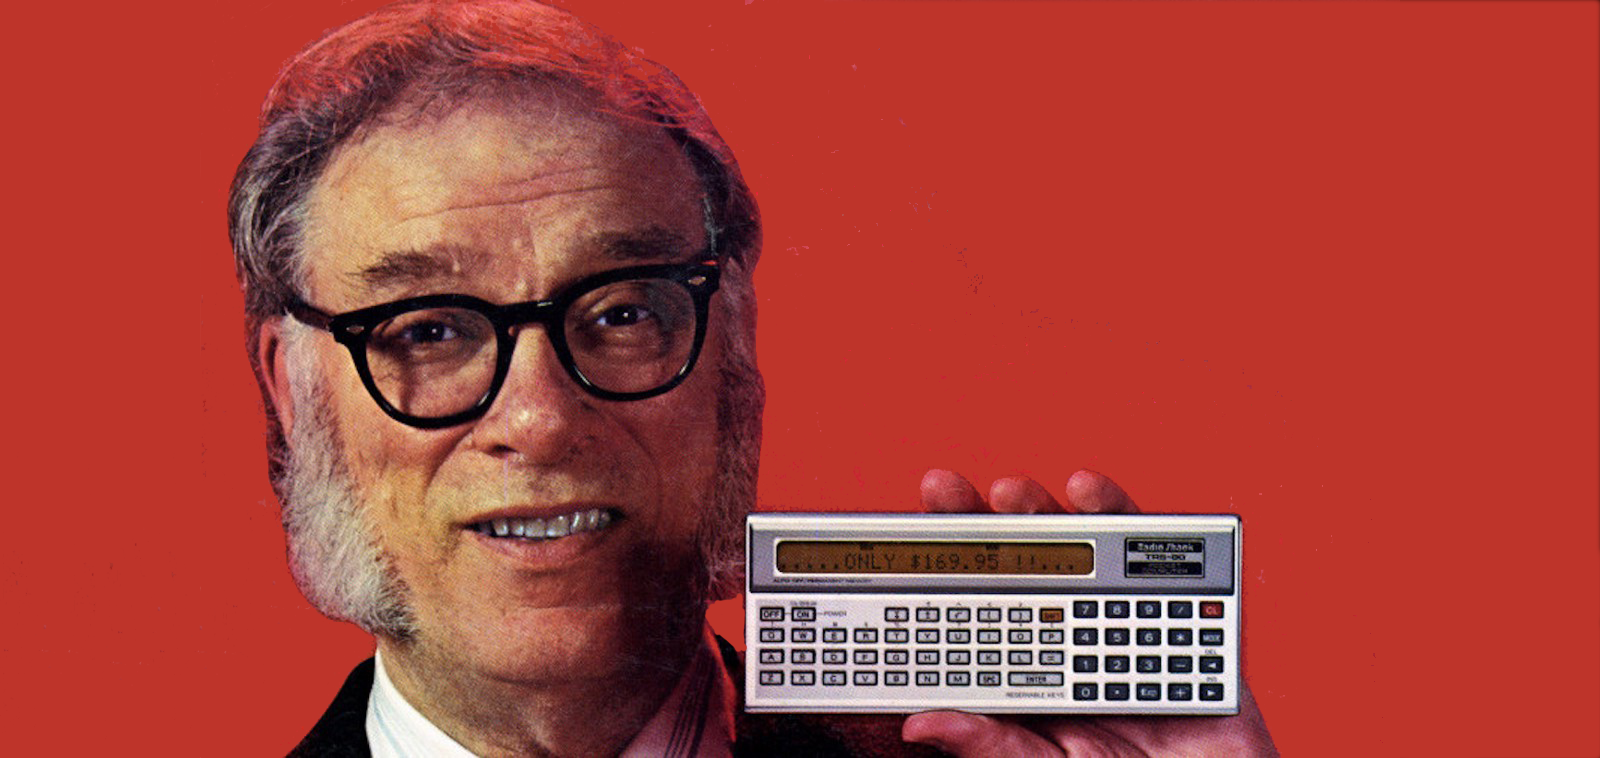 Isaac Asimov holds up a pocket calculator.